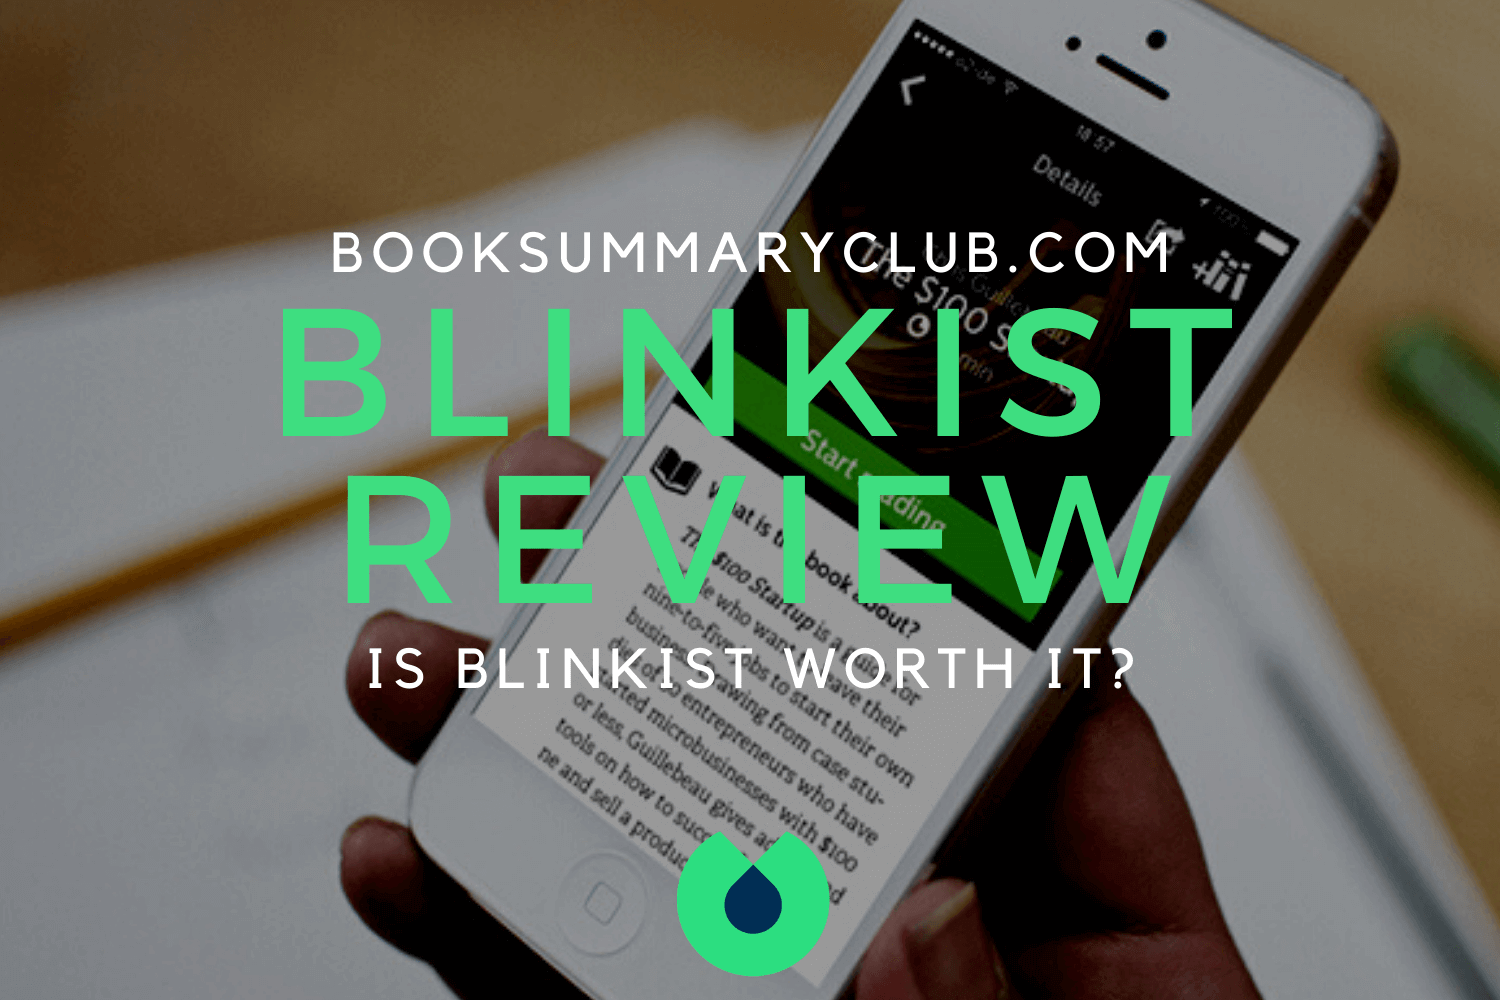 Booksummaryclub's blinkist review